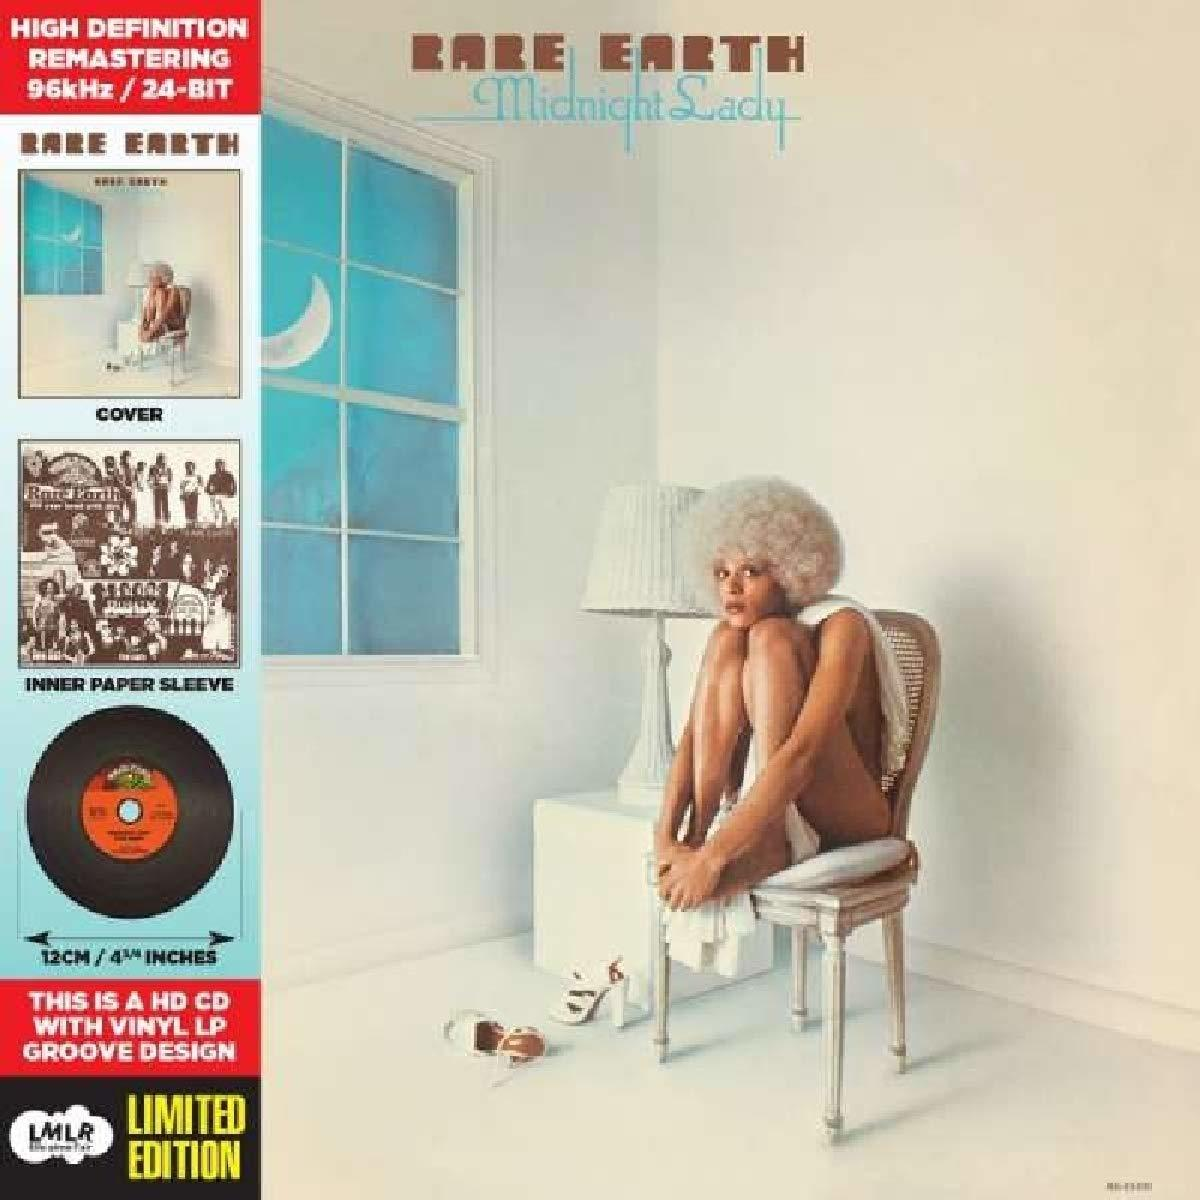 Rare Earth - - (CD) Midnight Lady